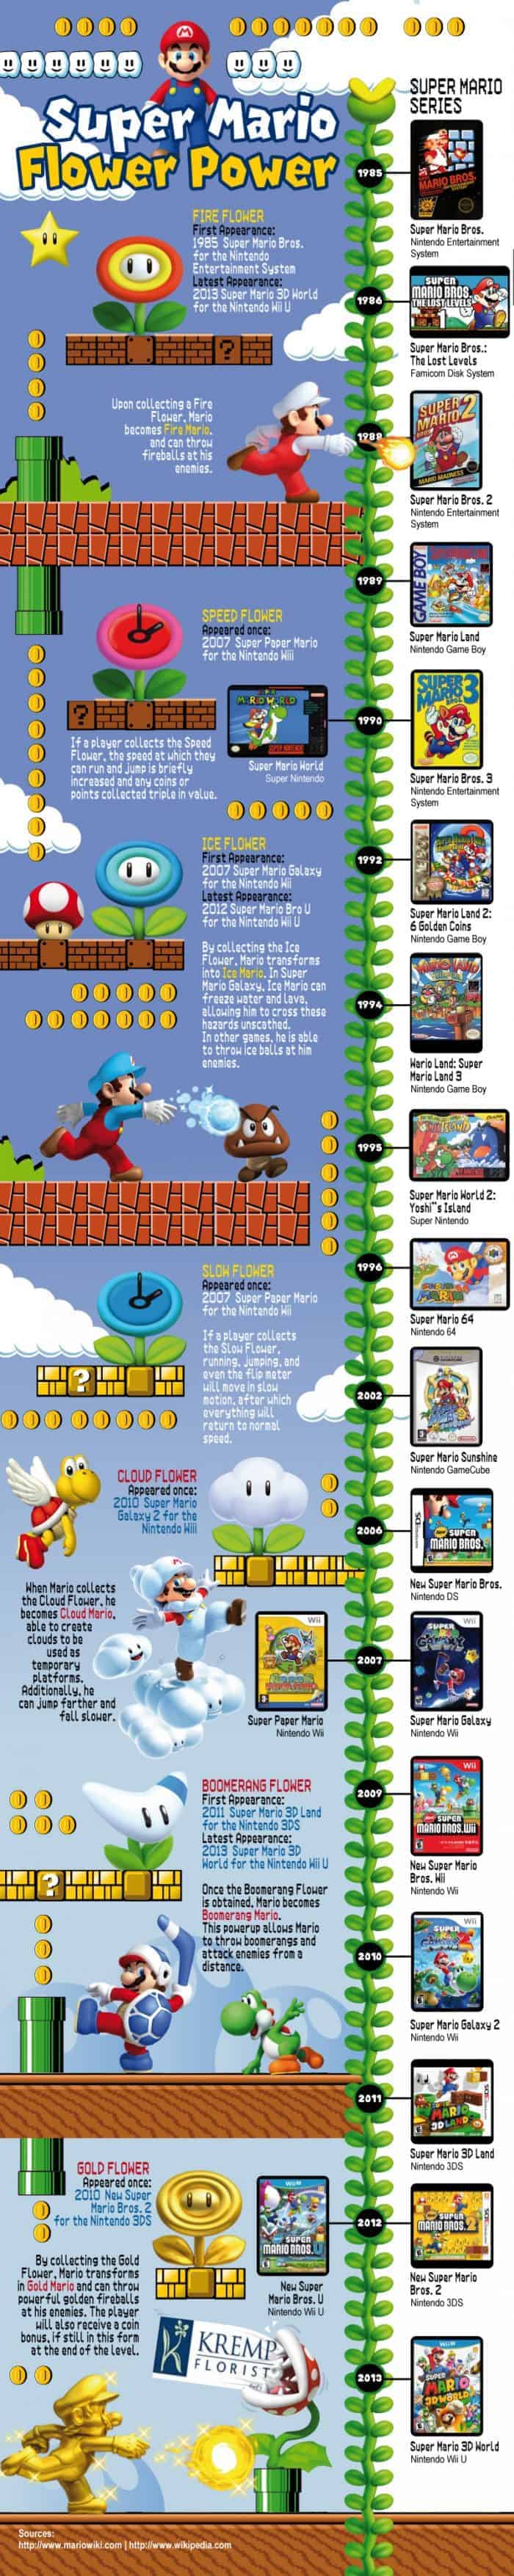 Super Mario Flower Power Infographic